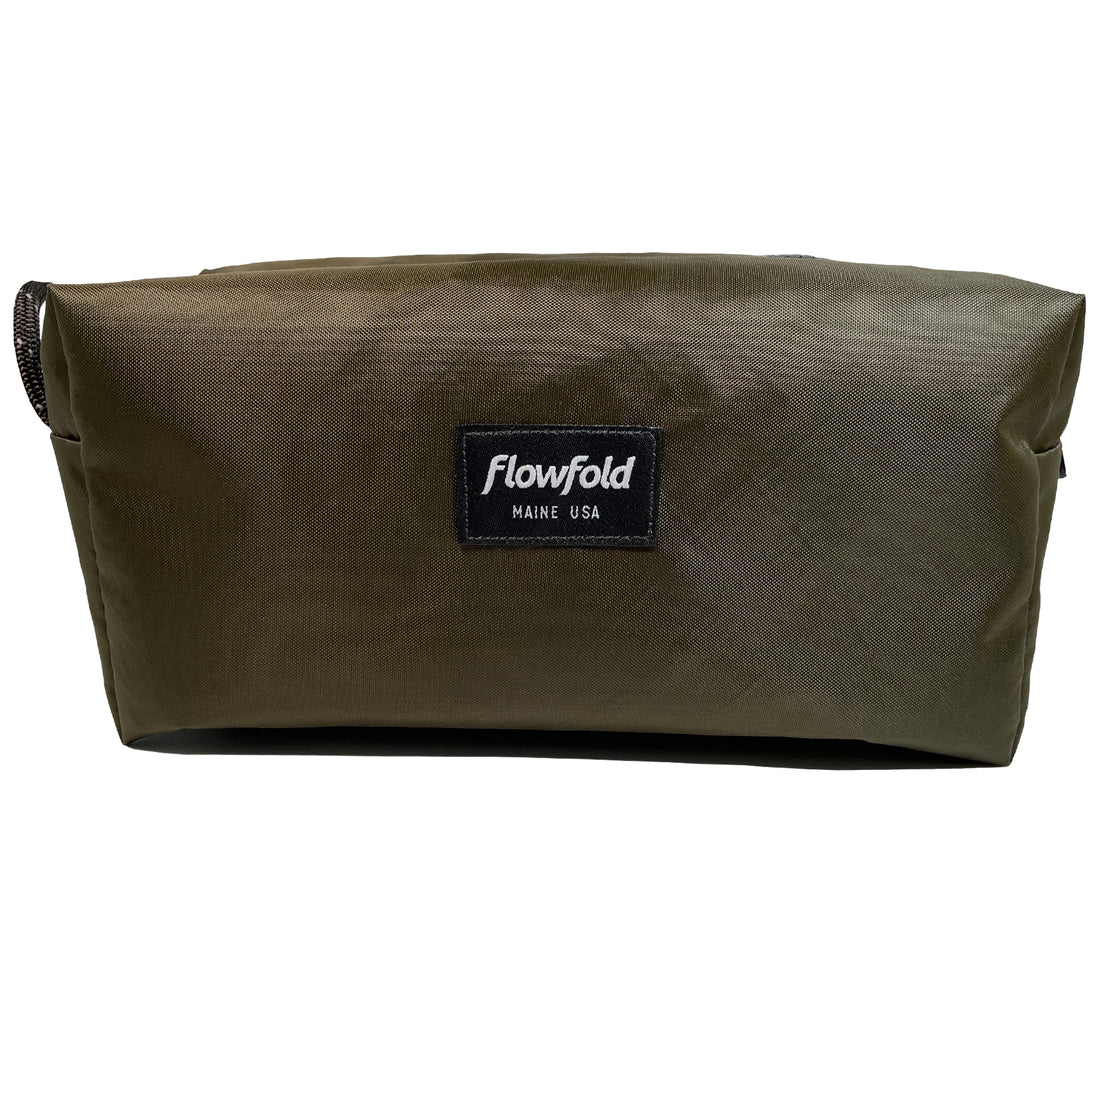 Flowfold Dopp Bag